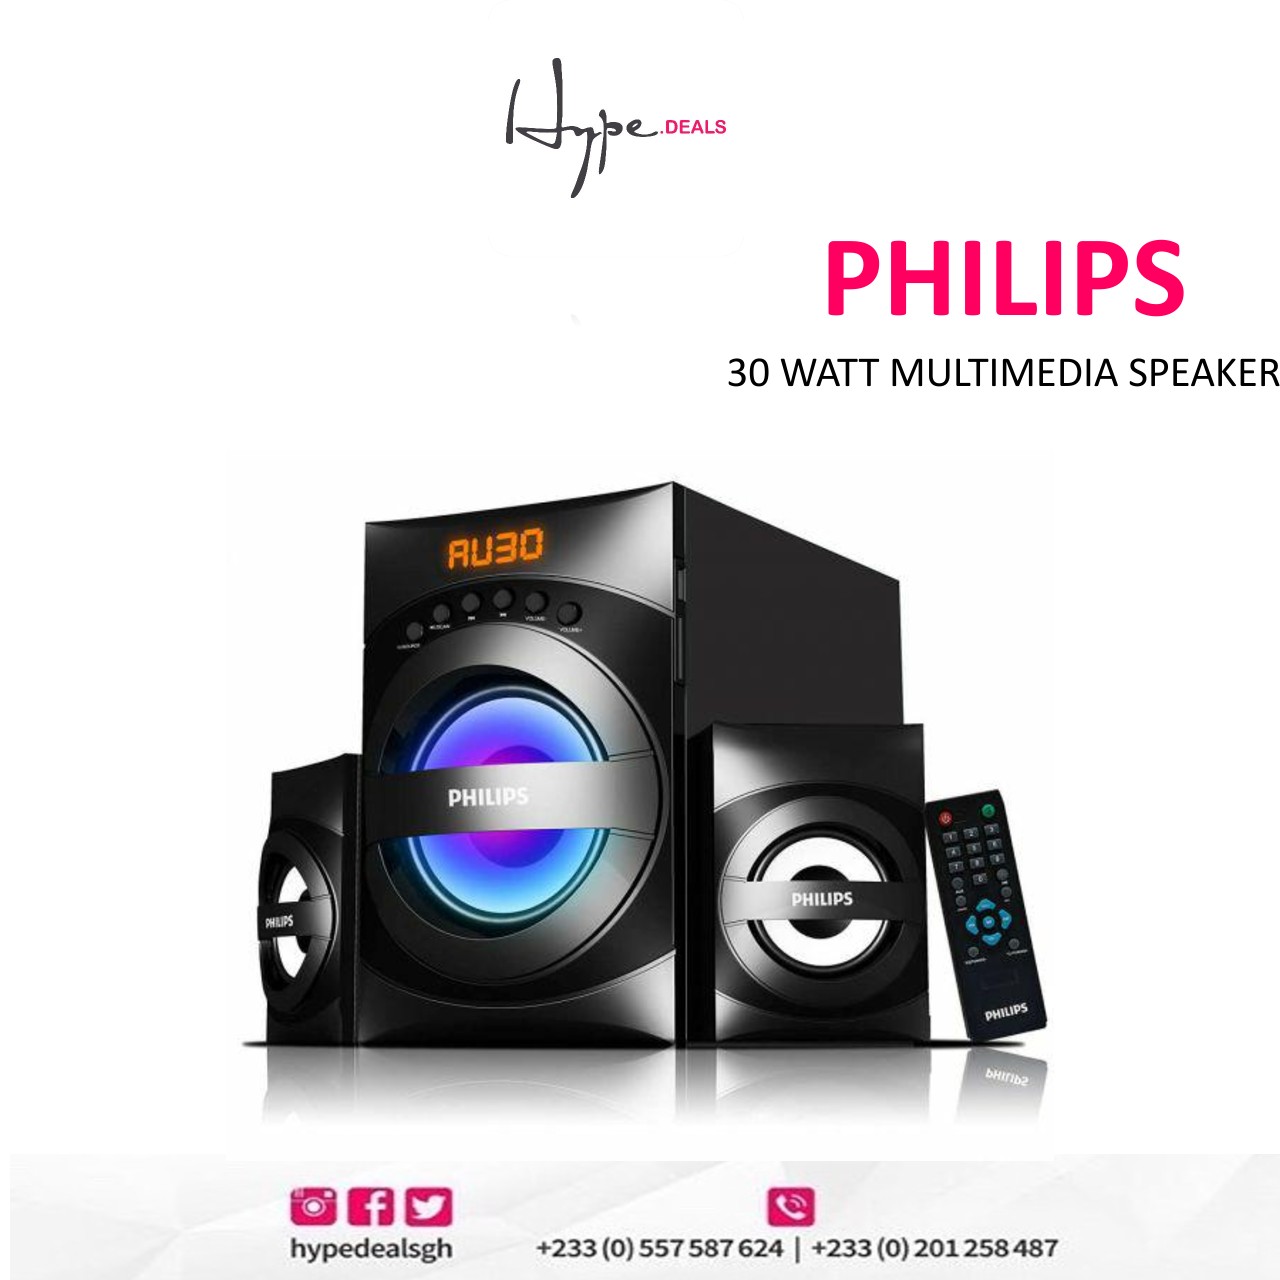 Philips 30 Watt Multimedia Speaker (MMS3535F)